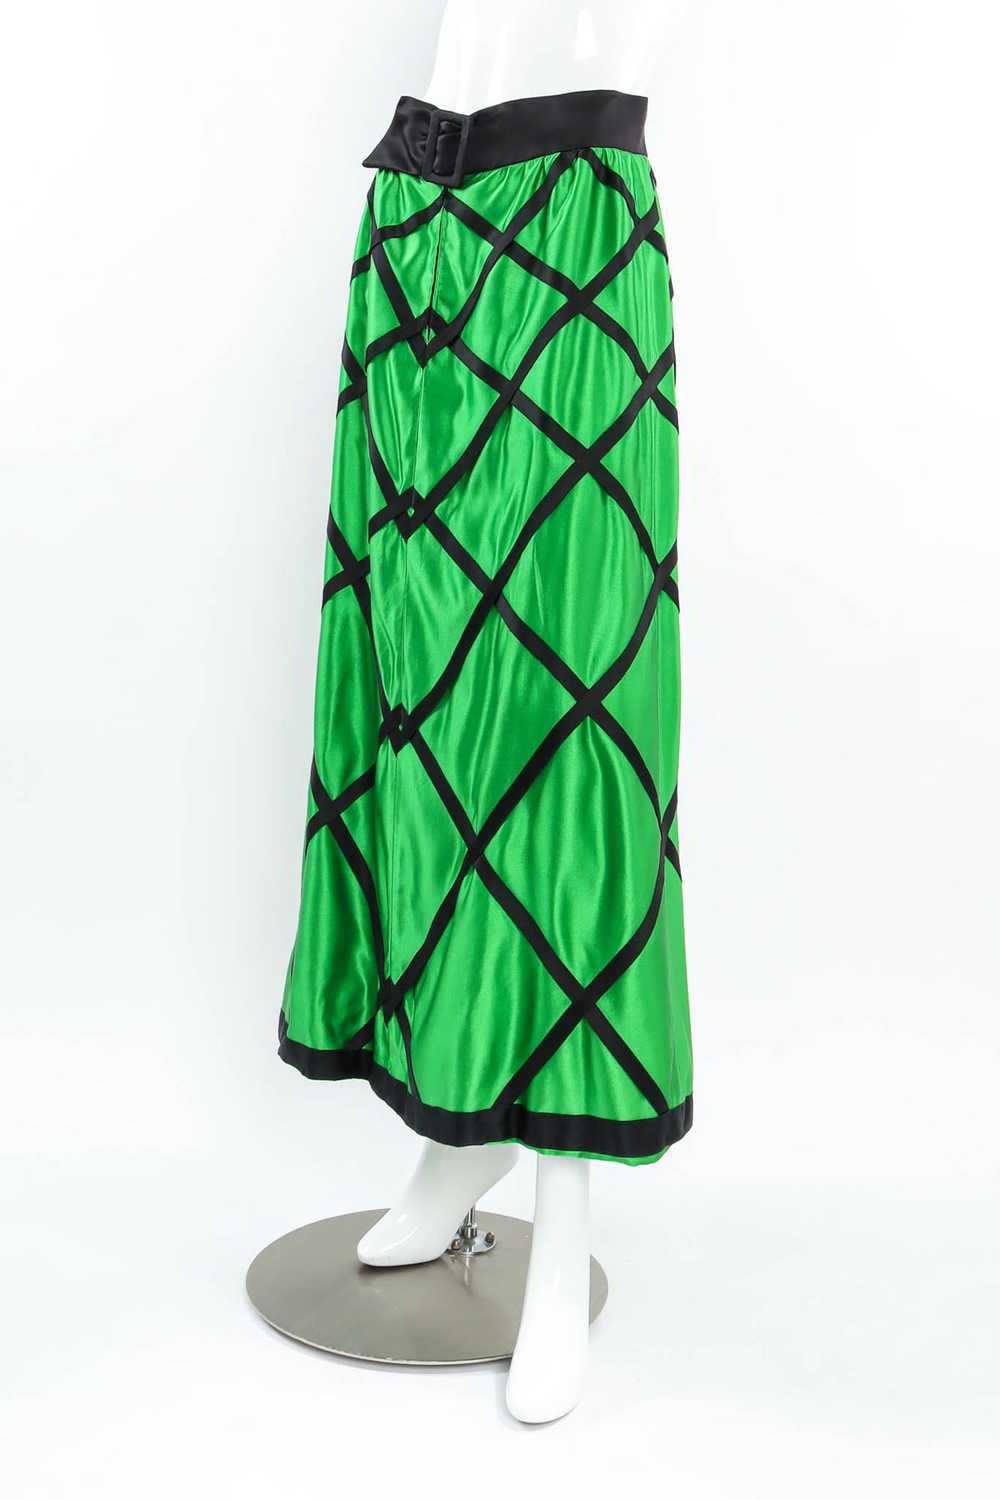 JERRY SILVERMAN Checker Print Hostess Skirt - image 3